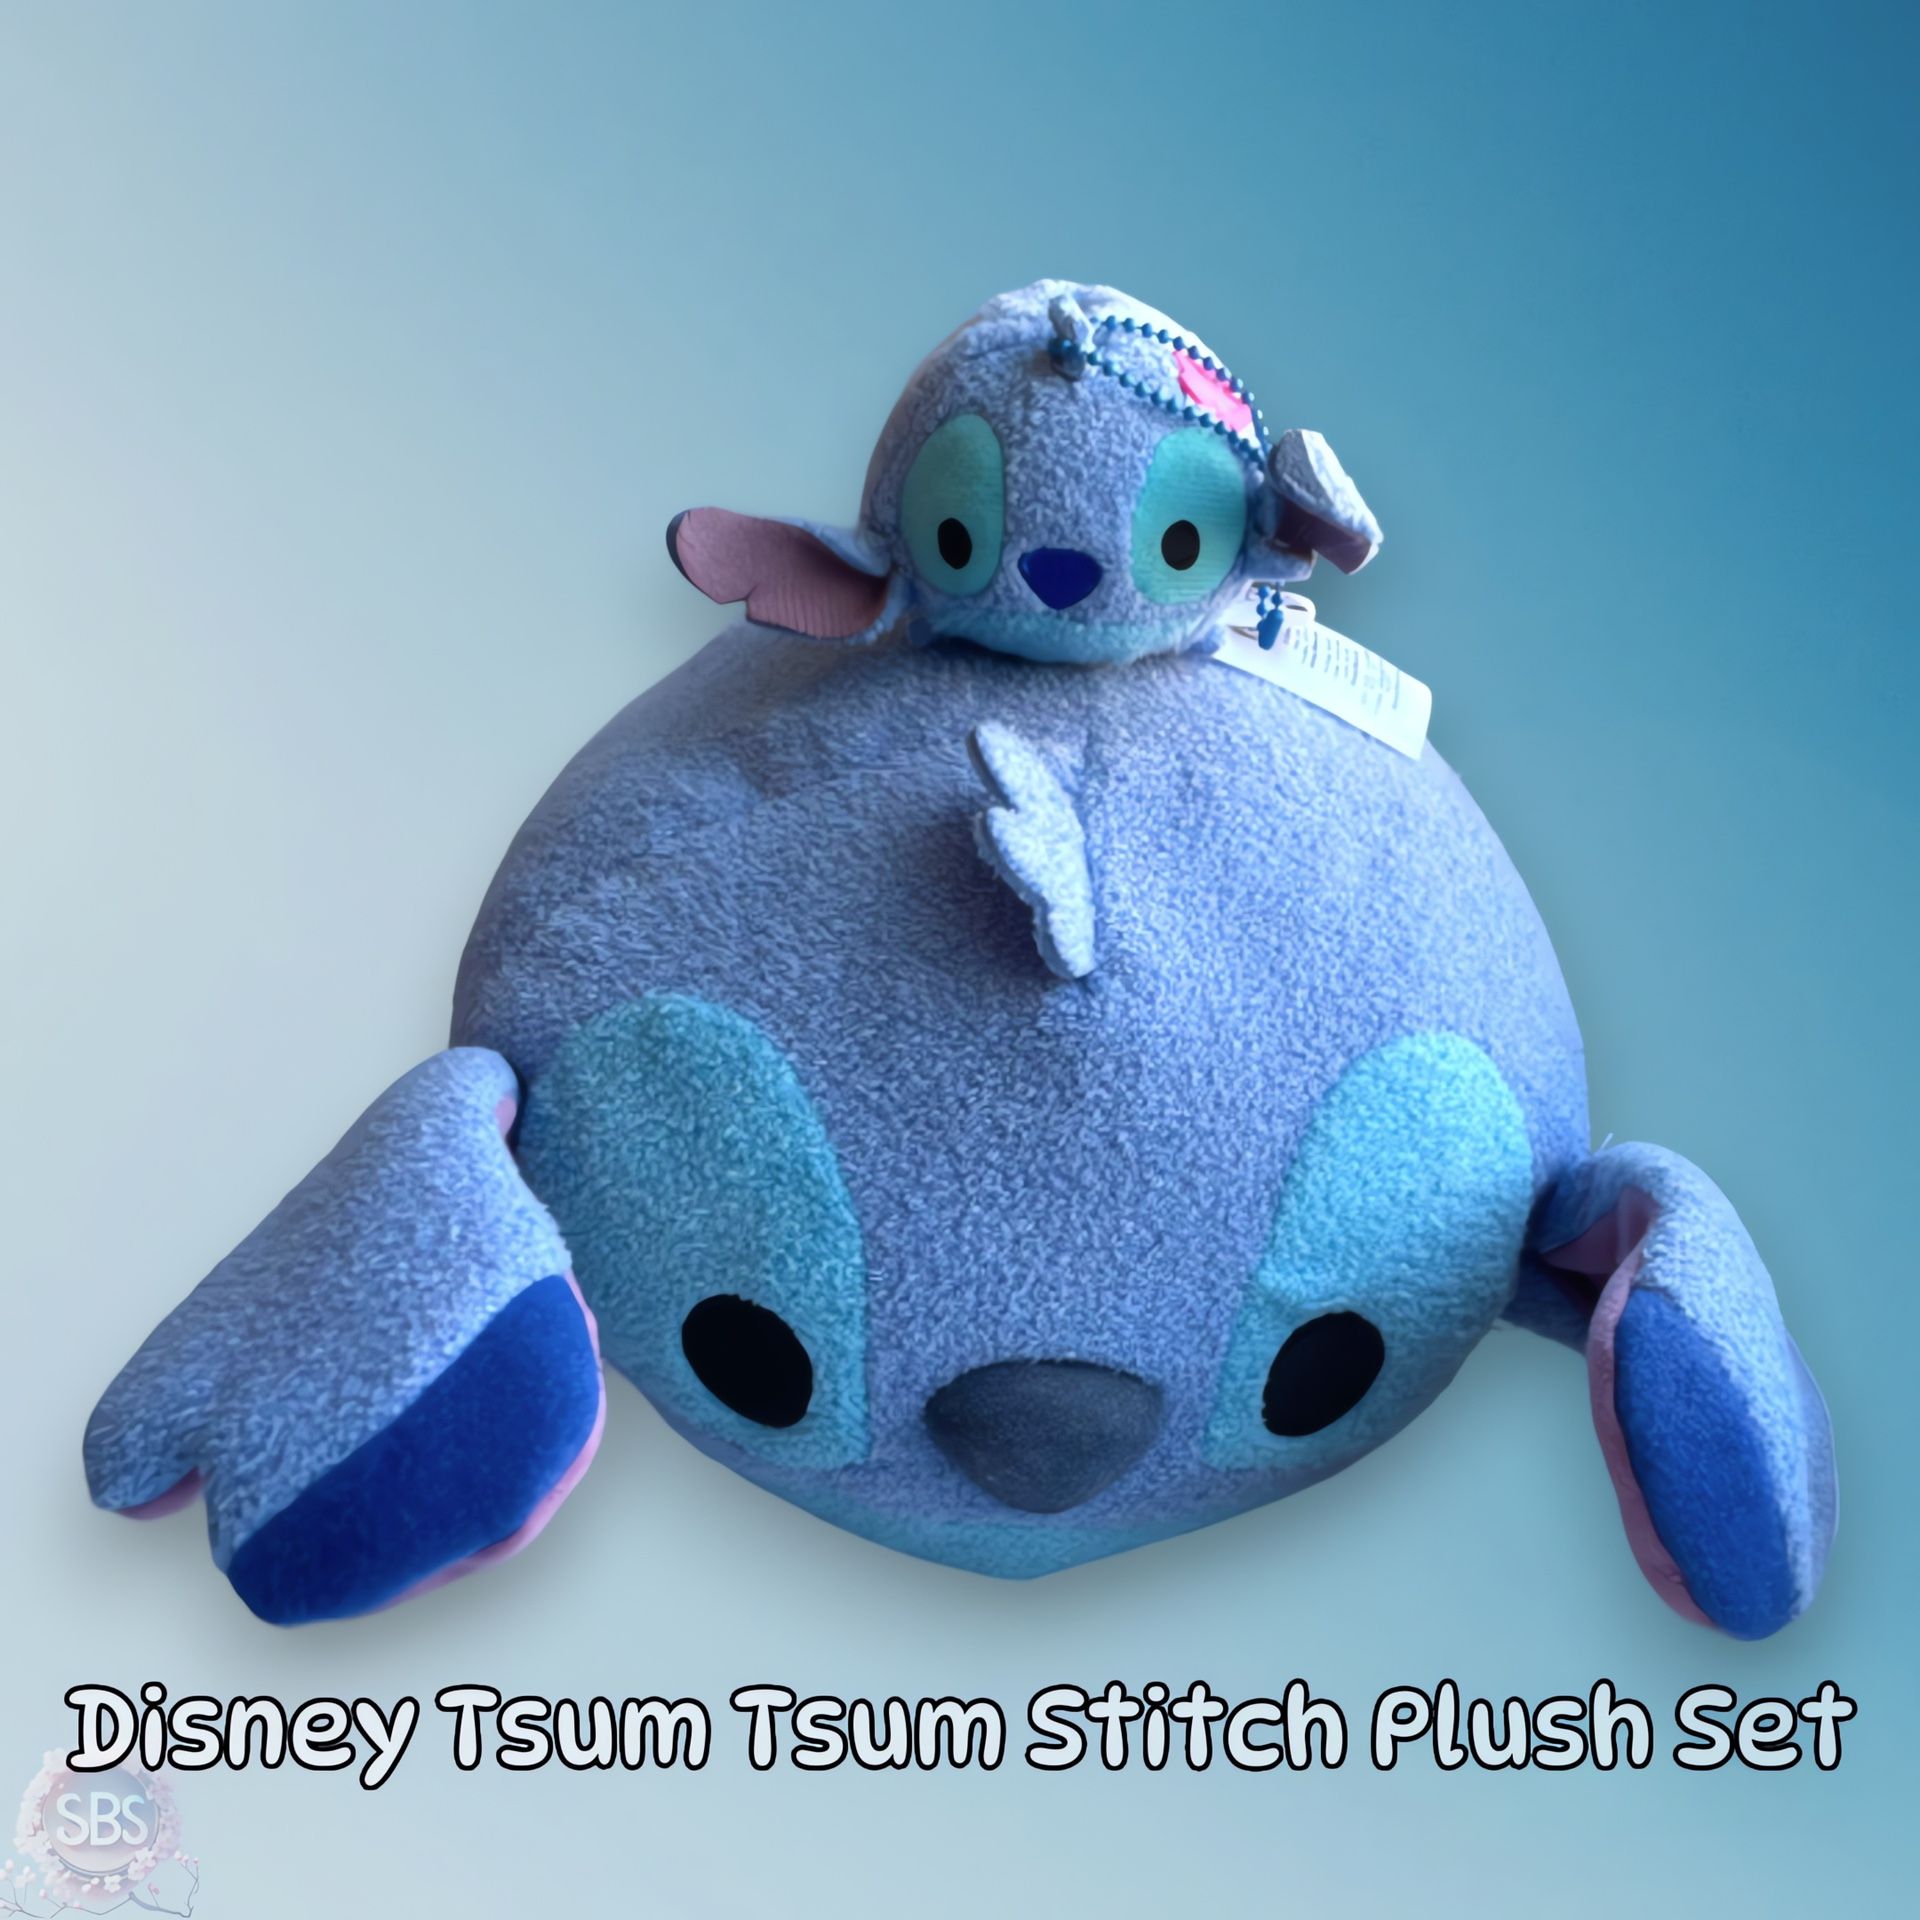 Tsum Tsum Stitch Plush Set - Disney Cuddle Buddies!